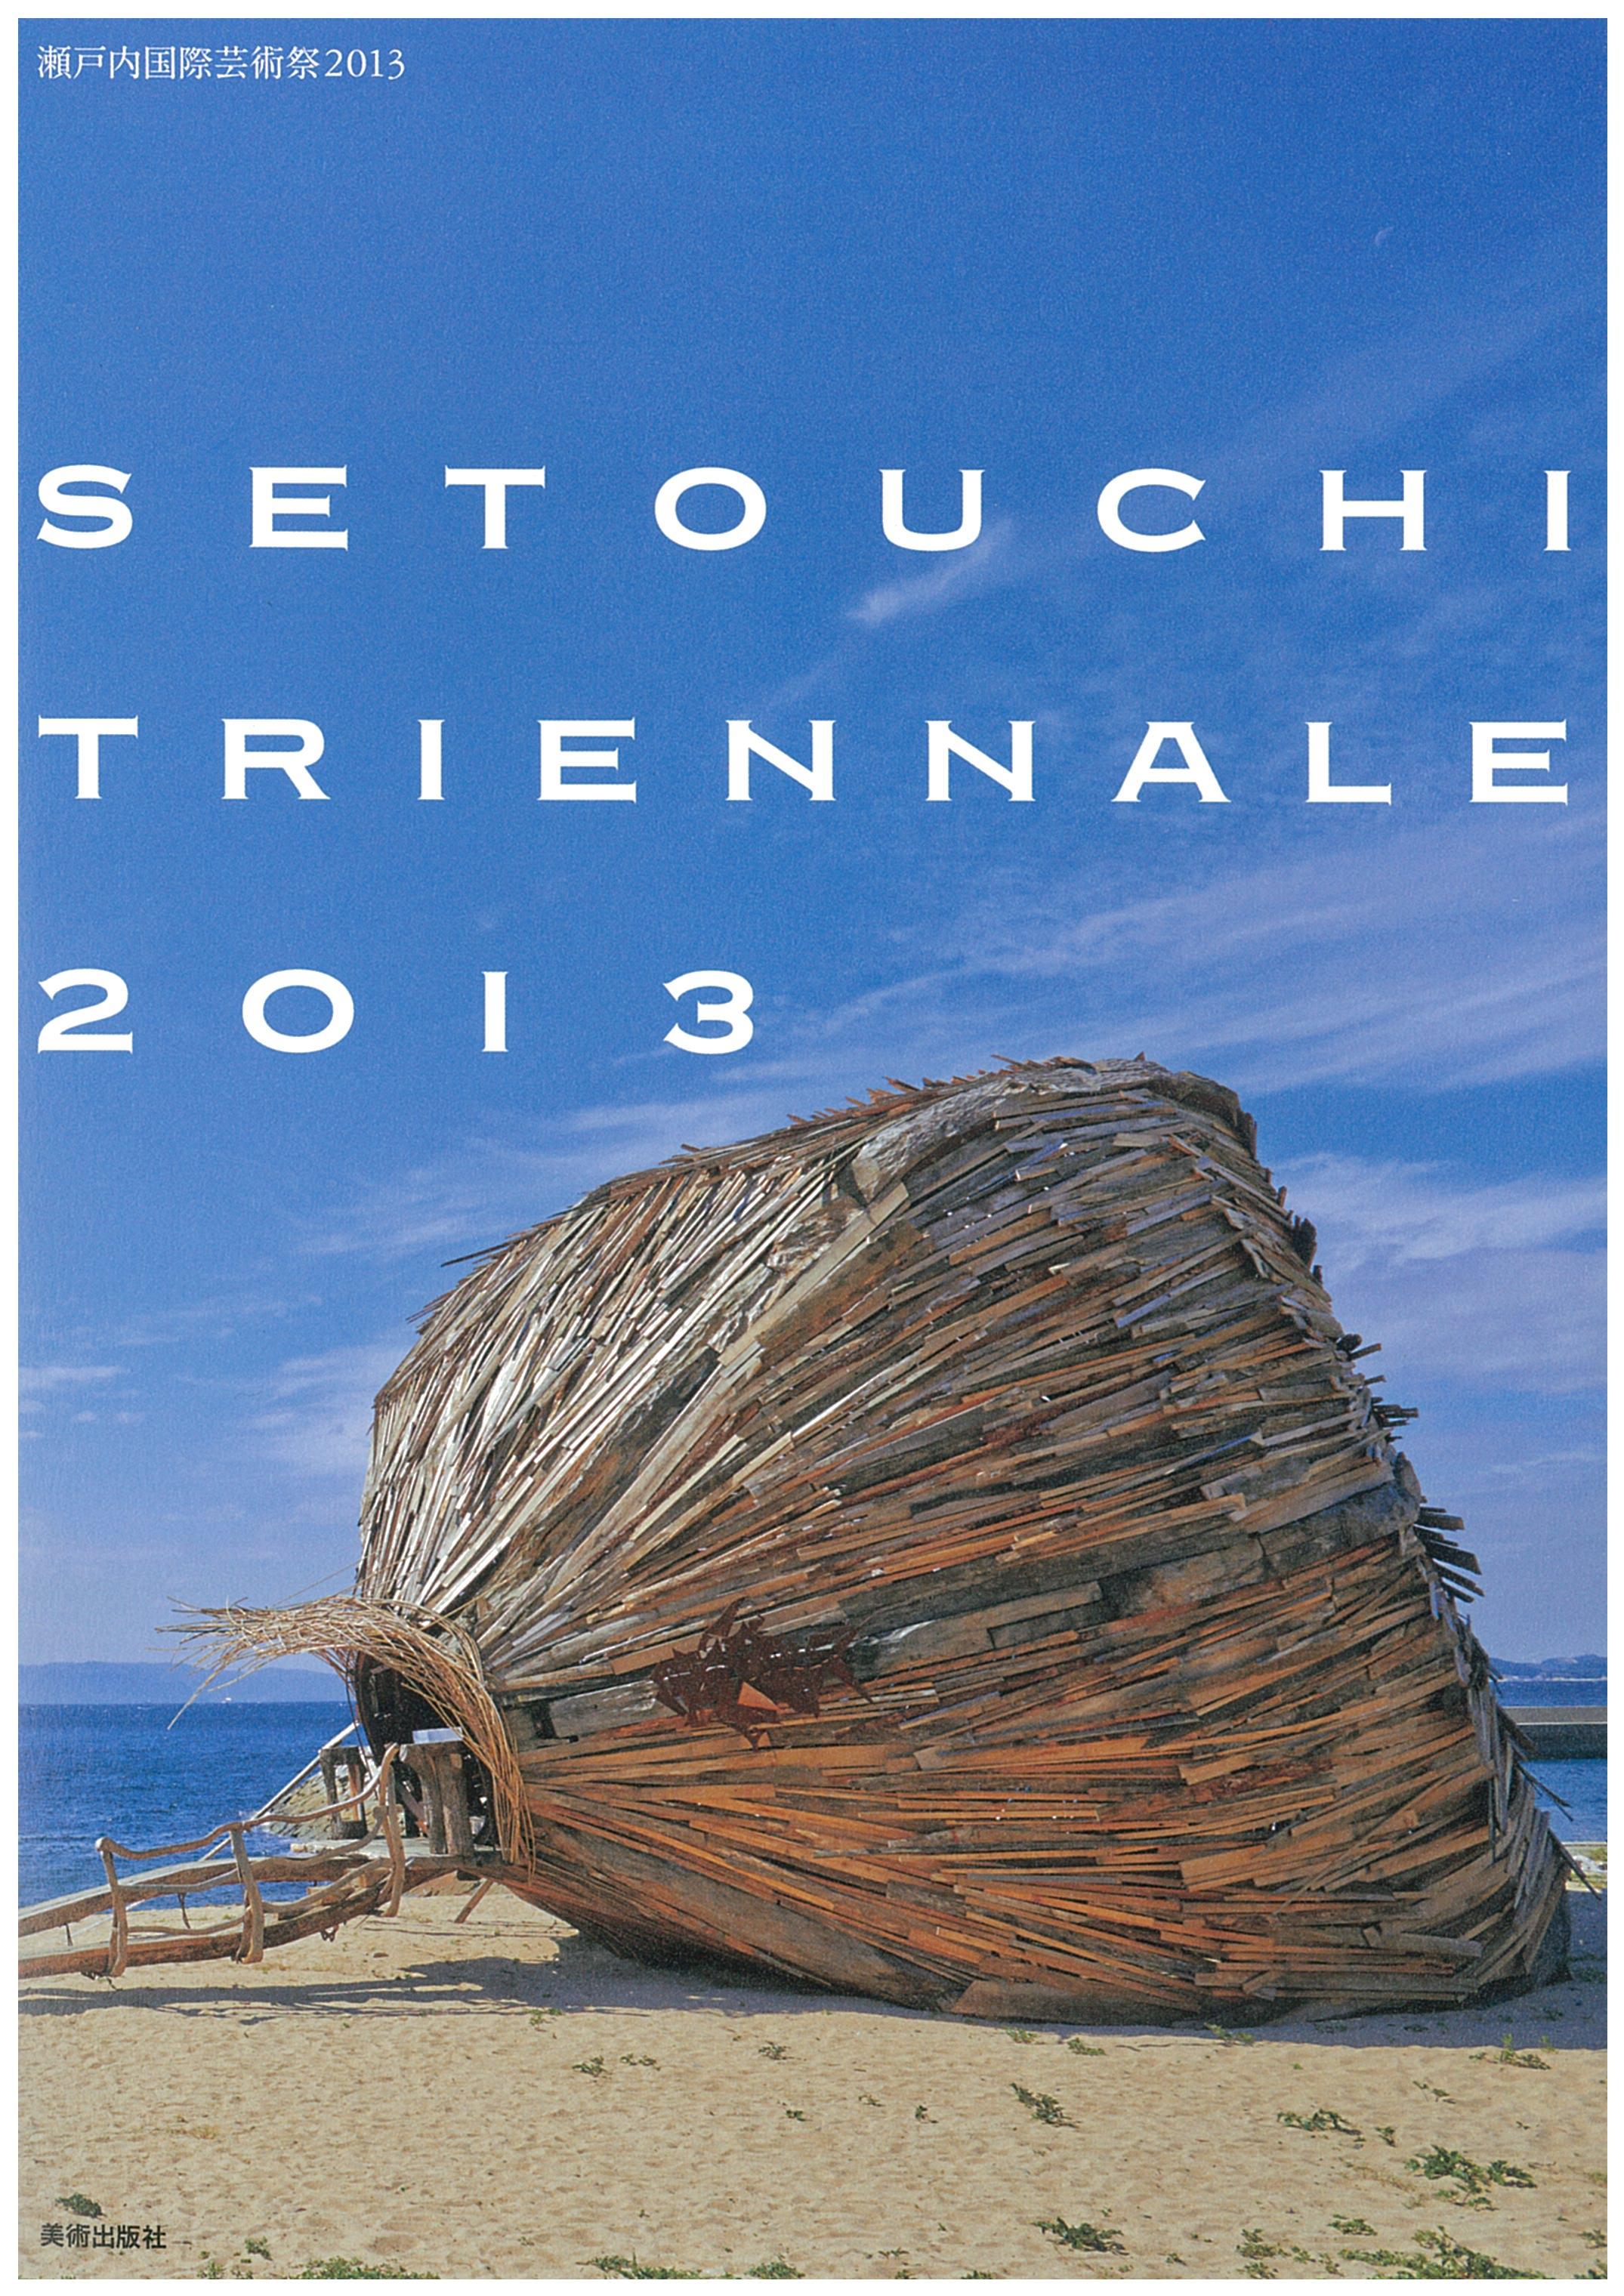 Official document book Setouchi Triennale 2013 